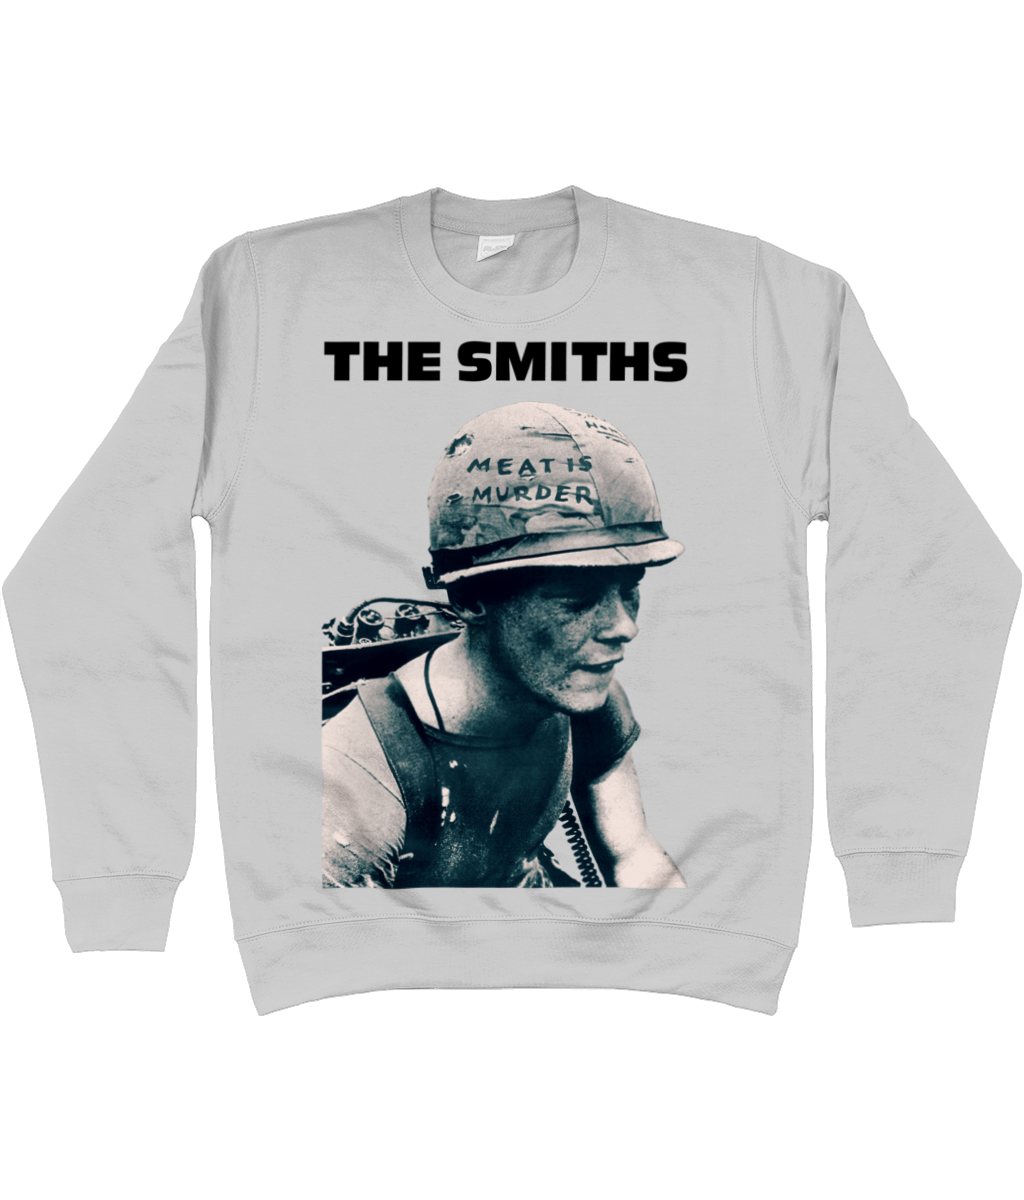 THE SMITHS - MEAT IS MURDER - Sweatshirt